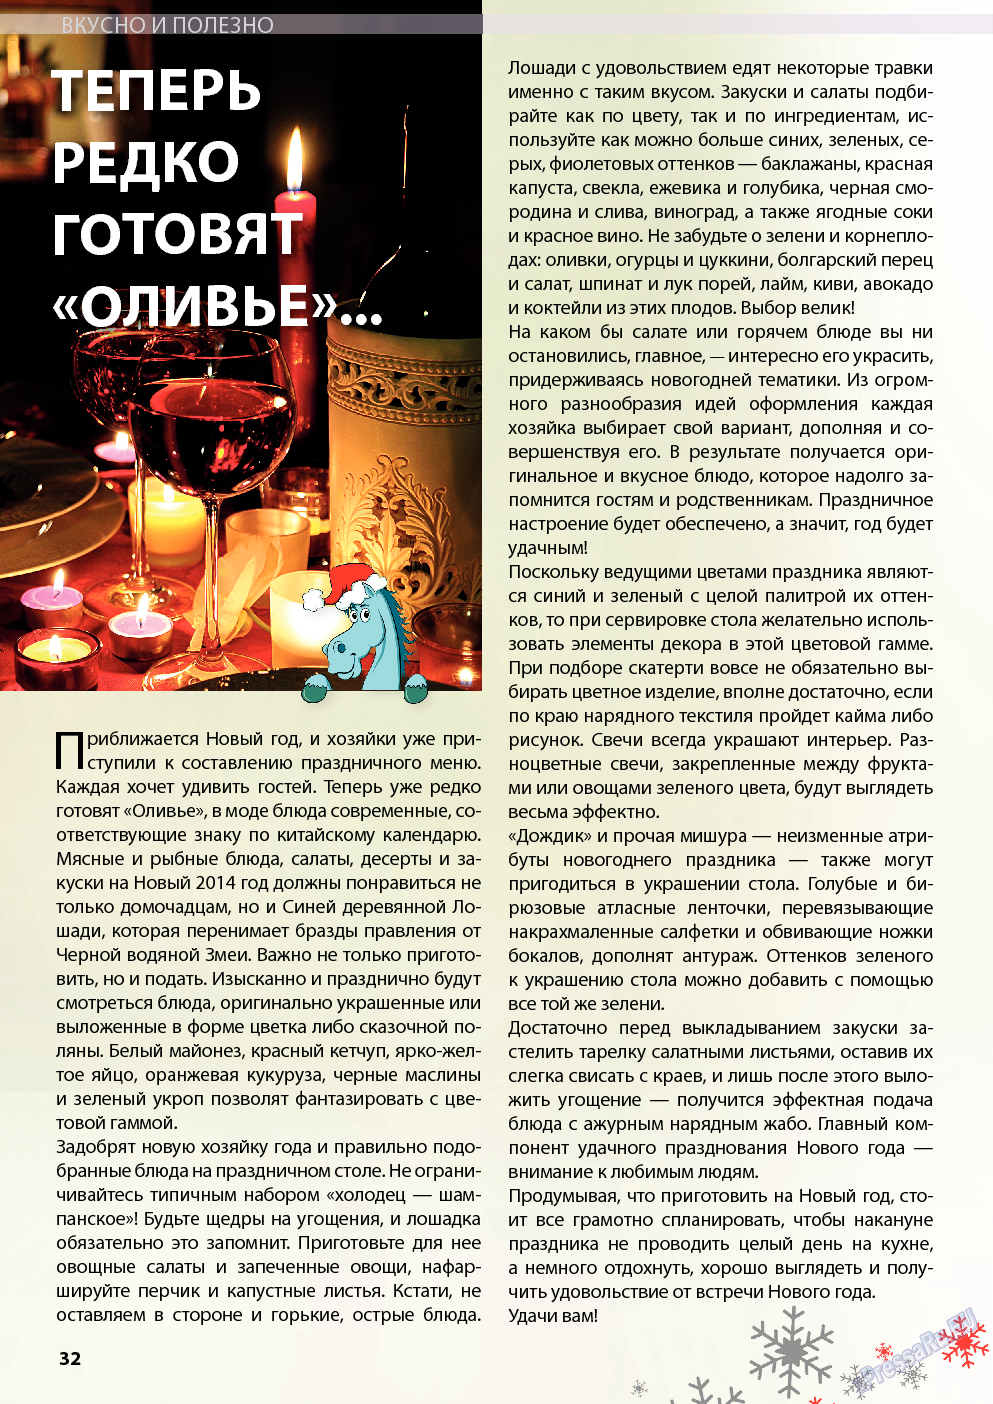 Wadim, журнал. 2013 №12 стр.32